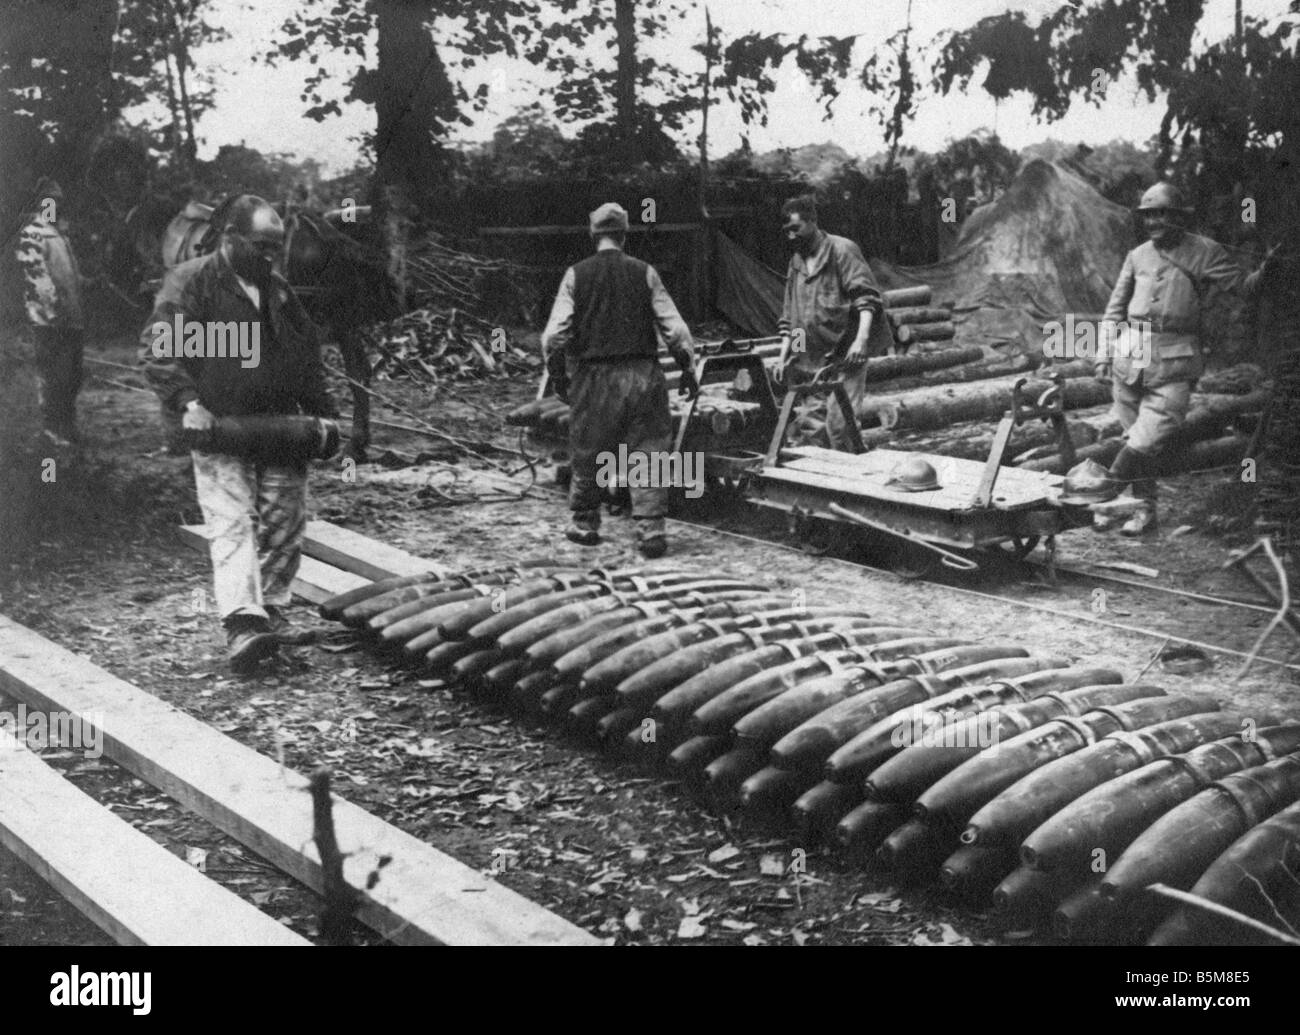 Ammunition depot world war 2 Black and White Stock Photos & Images - Alamy